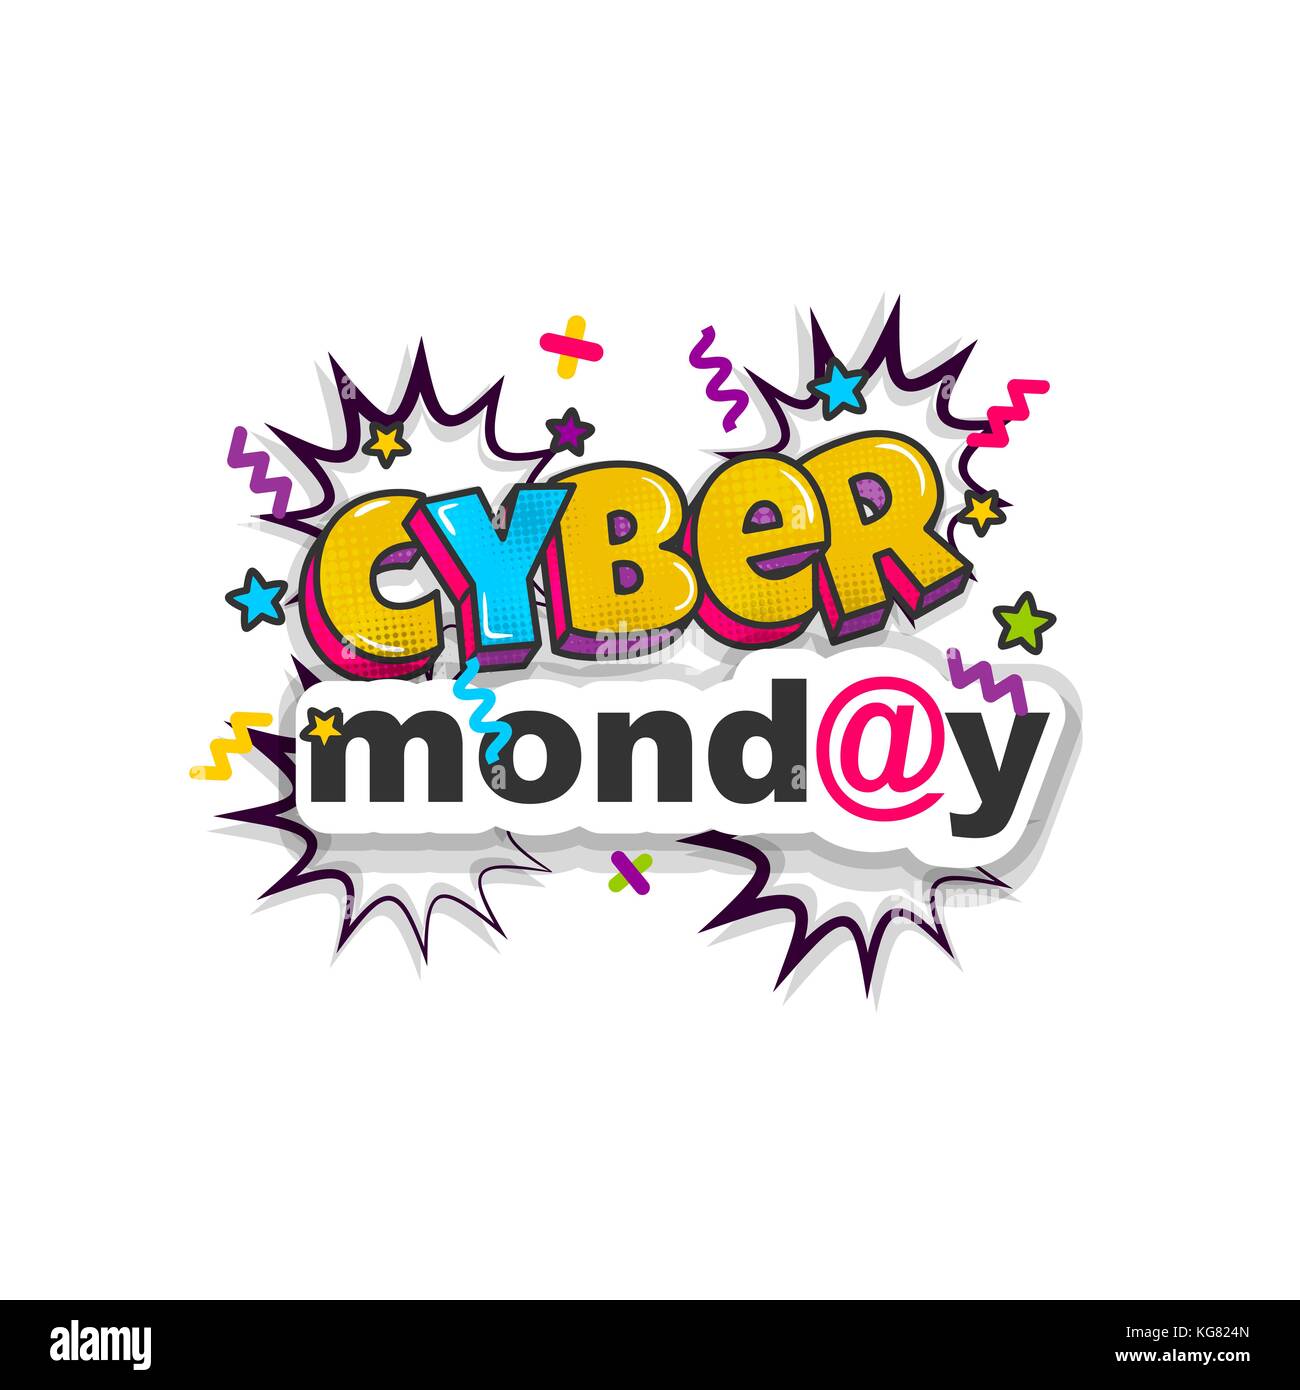 Cyber monday advertisement comic text pop art Stock Vector